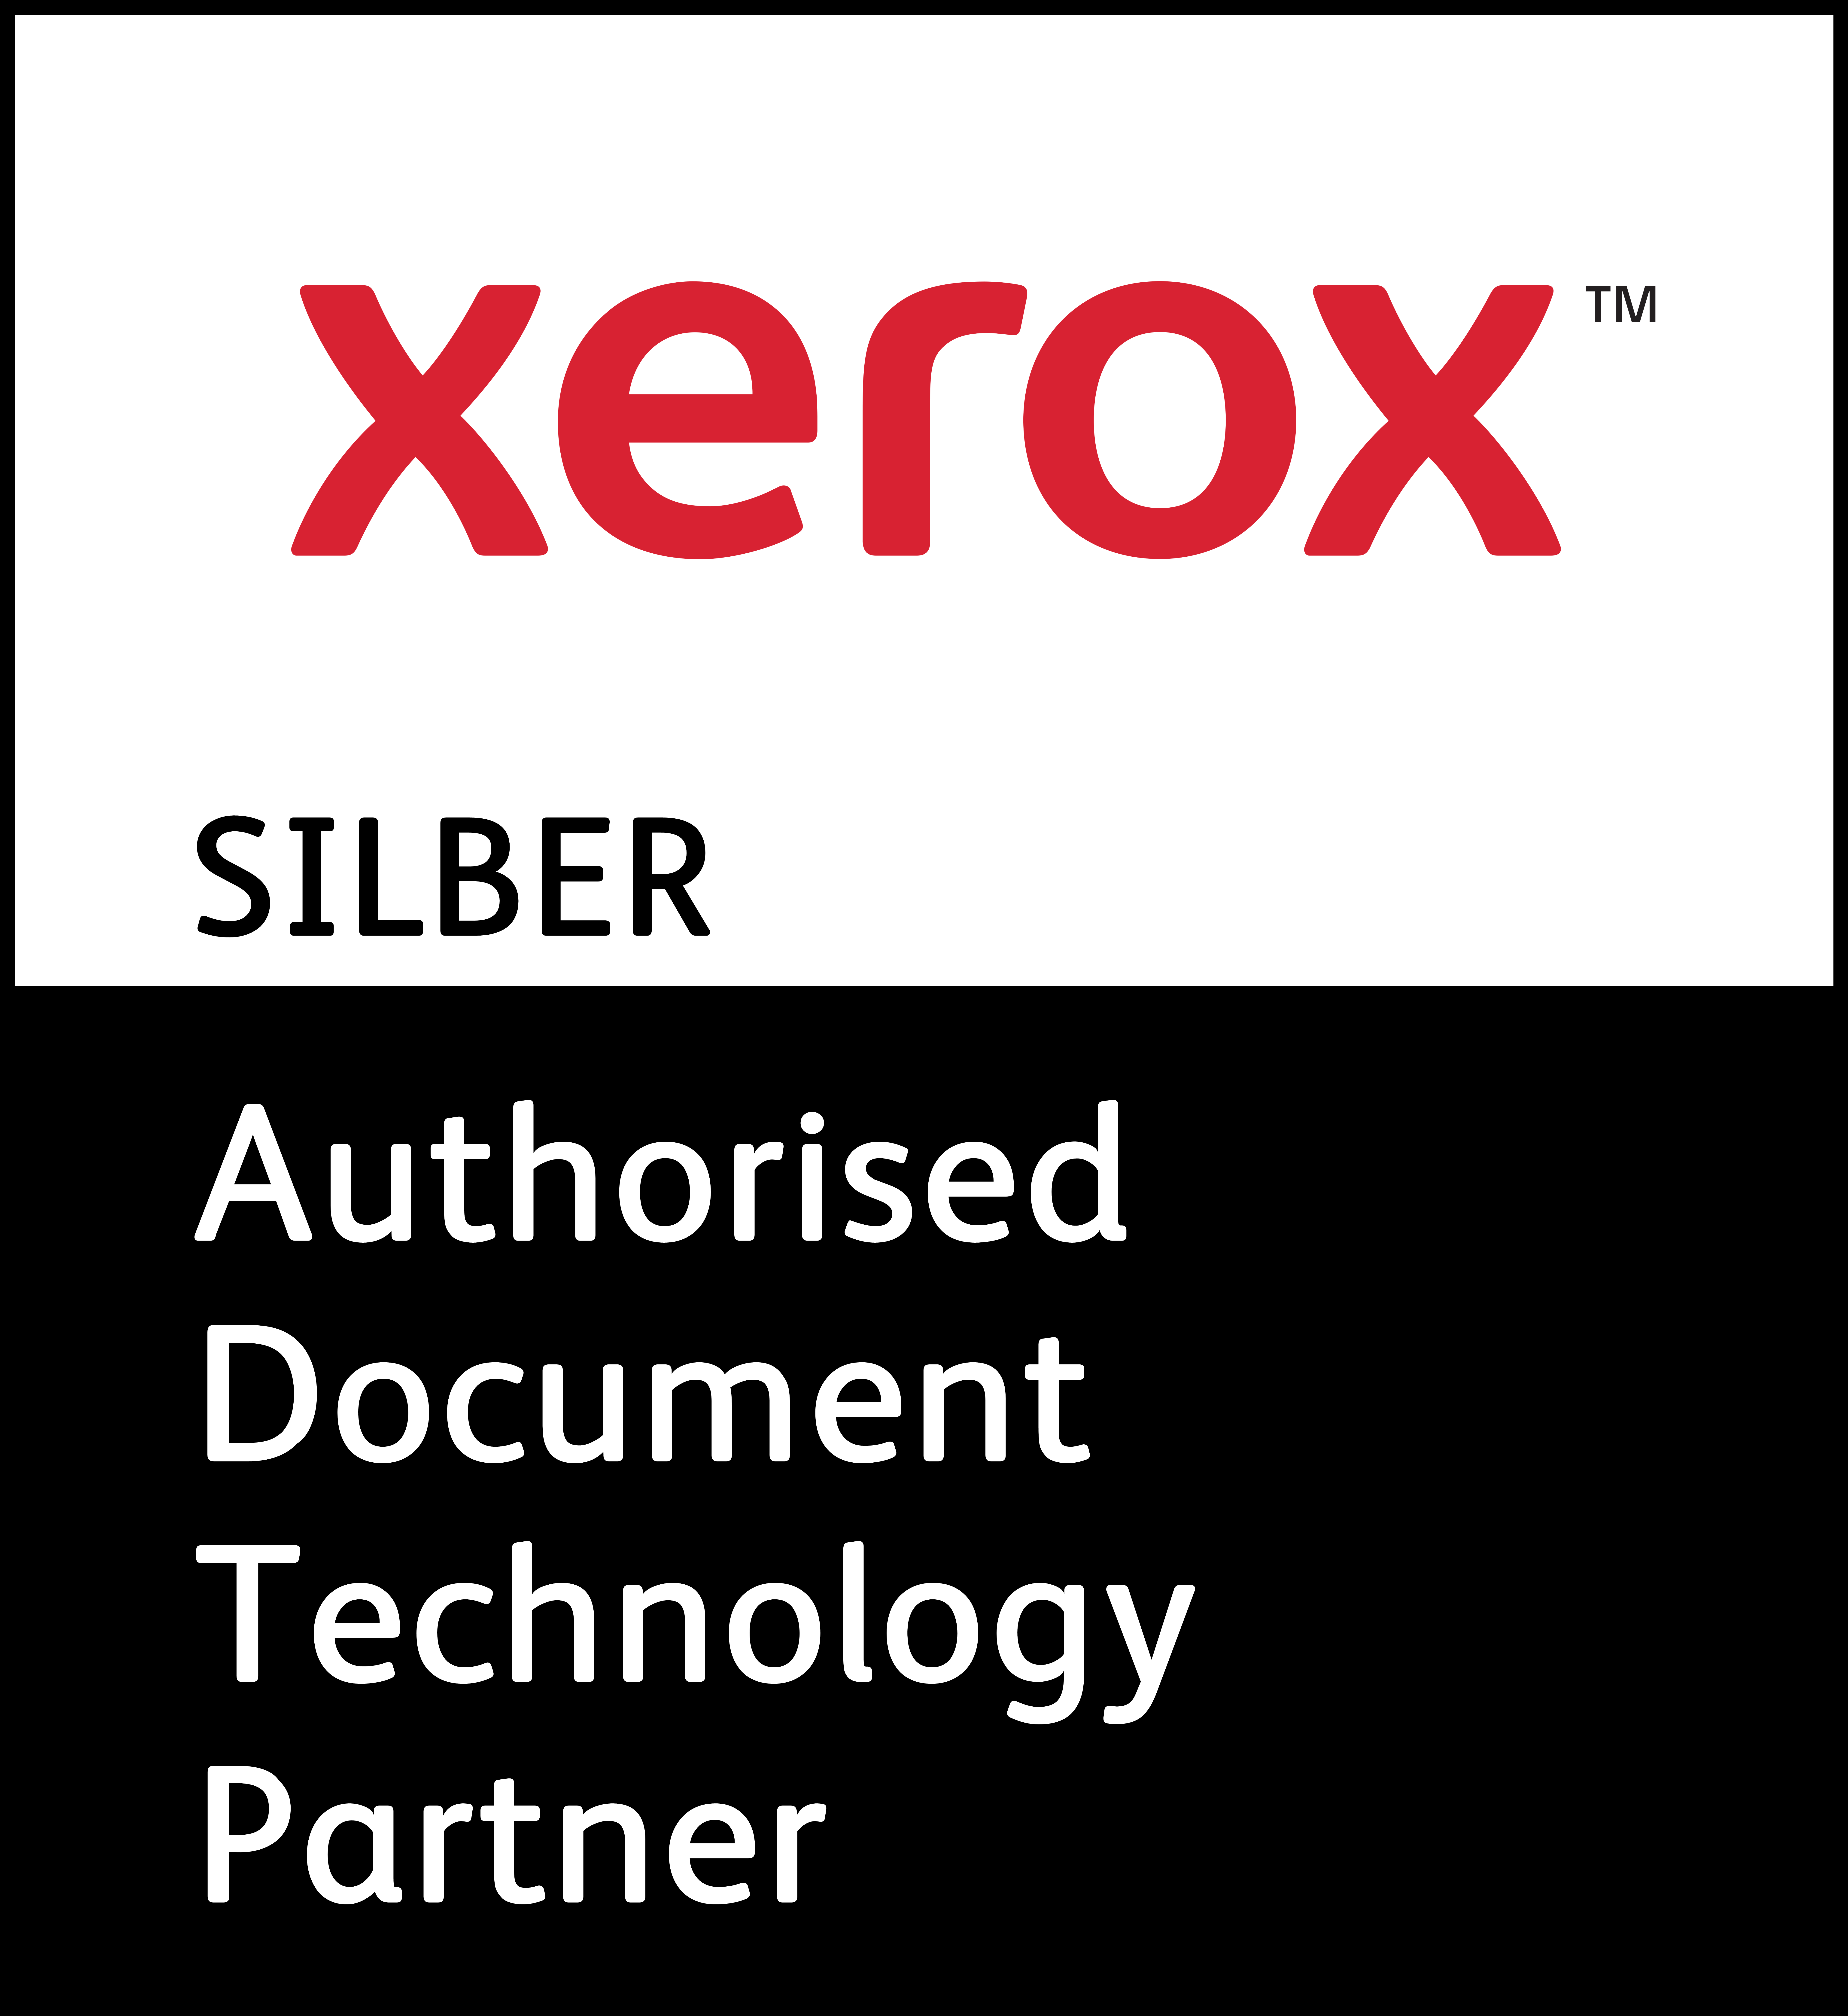 XEROX Silber Authorised Solution Provider